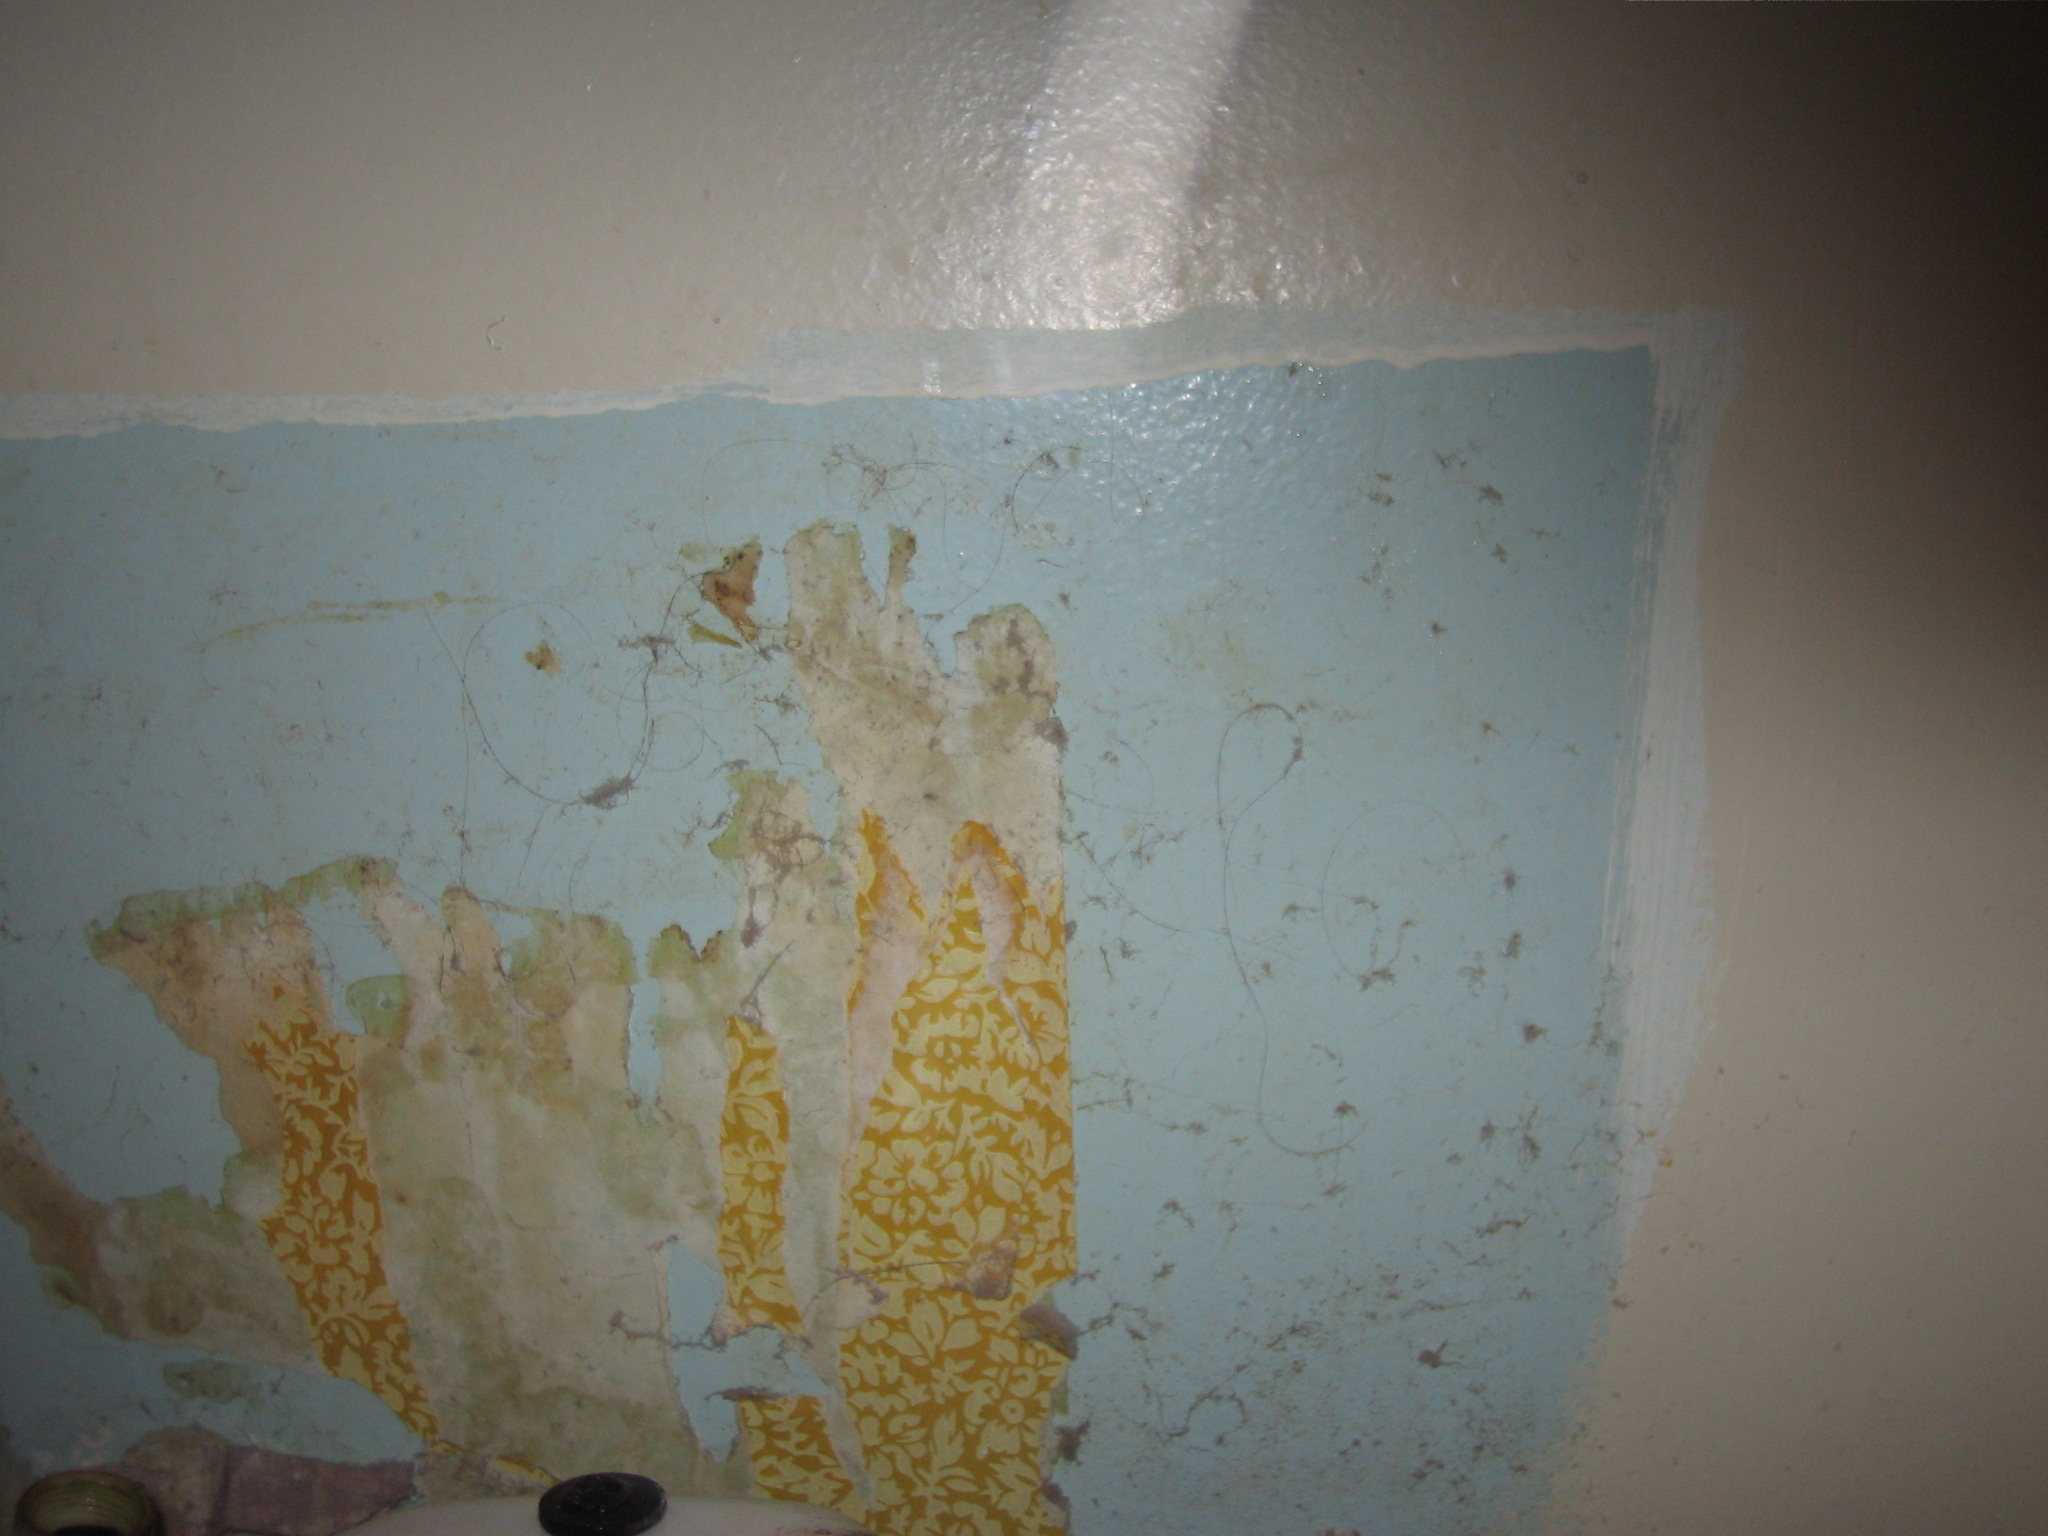 a wall with peeling paint and peeling peelings